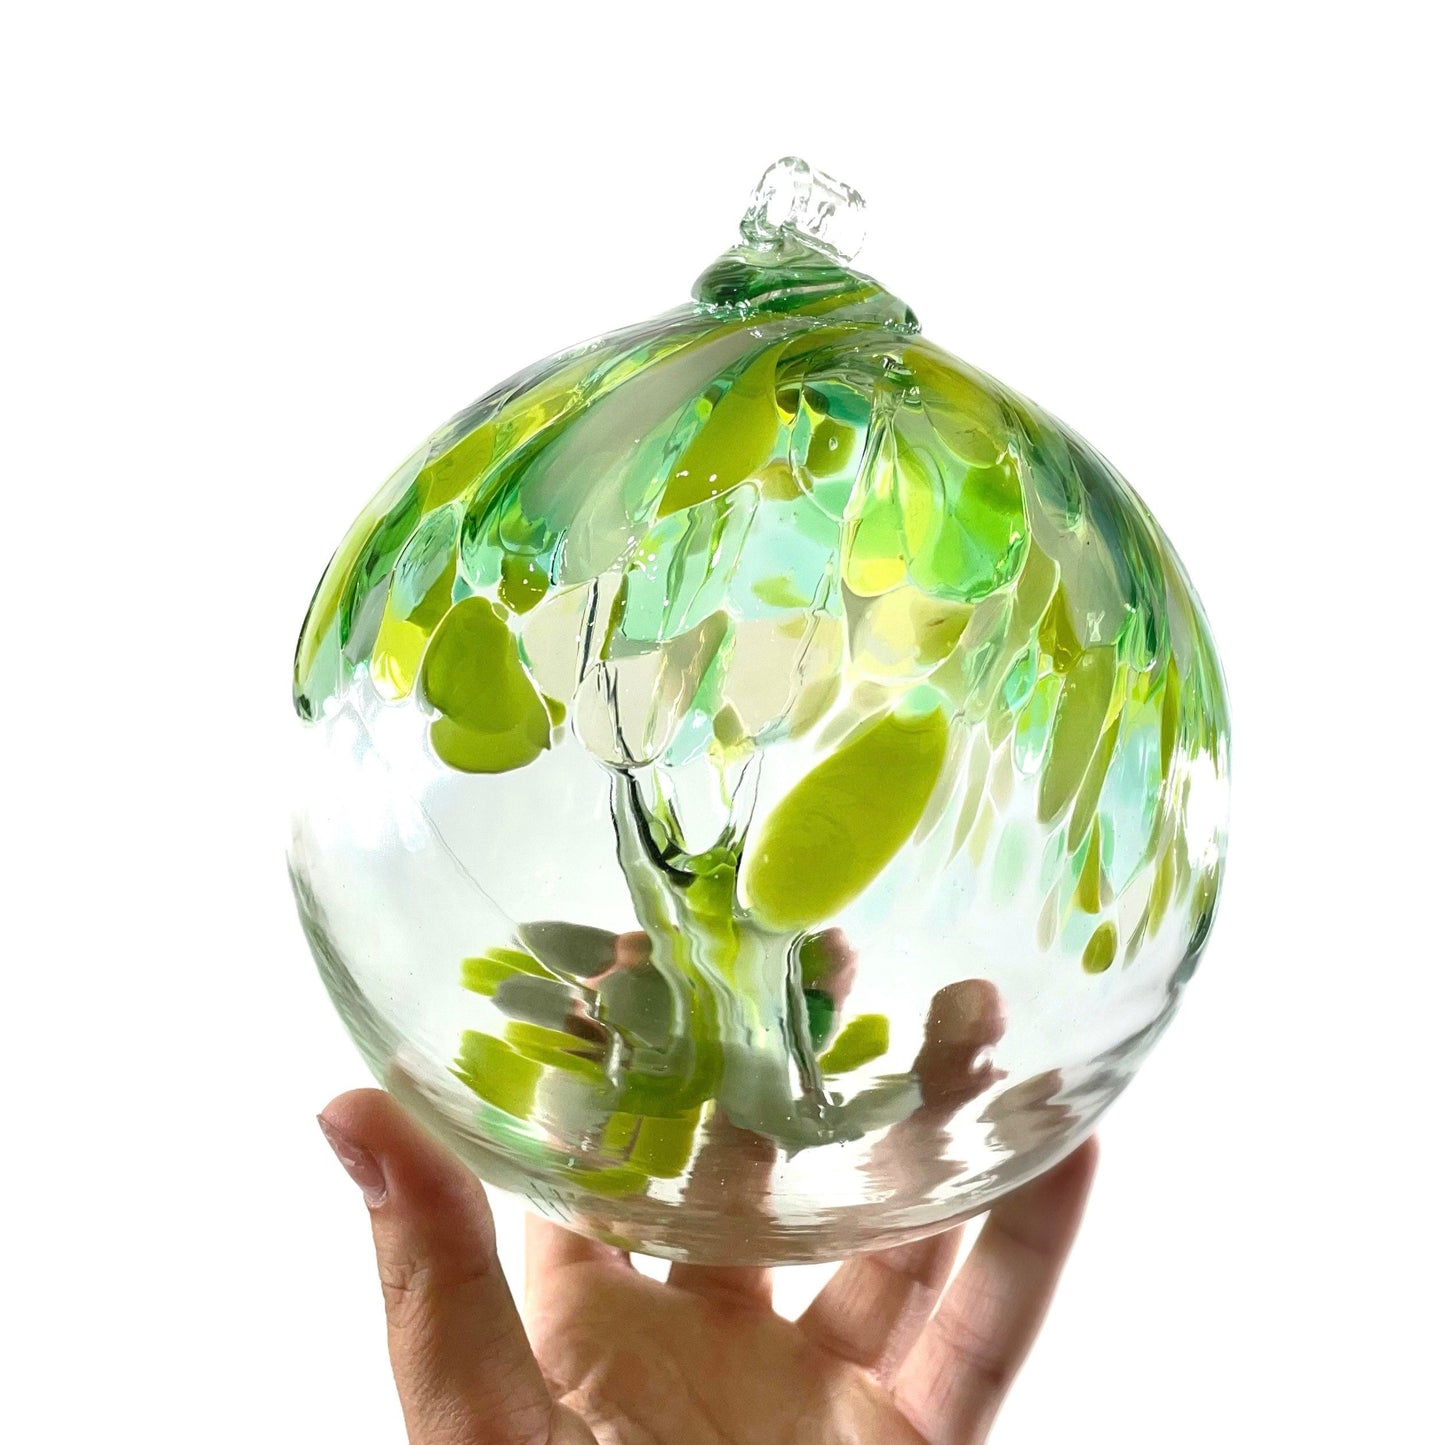 Handmade Glass Art 6” Globe Ornament - Tree of Wellbeing